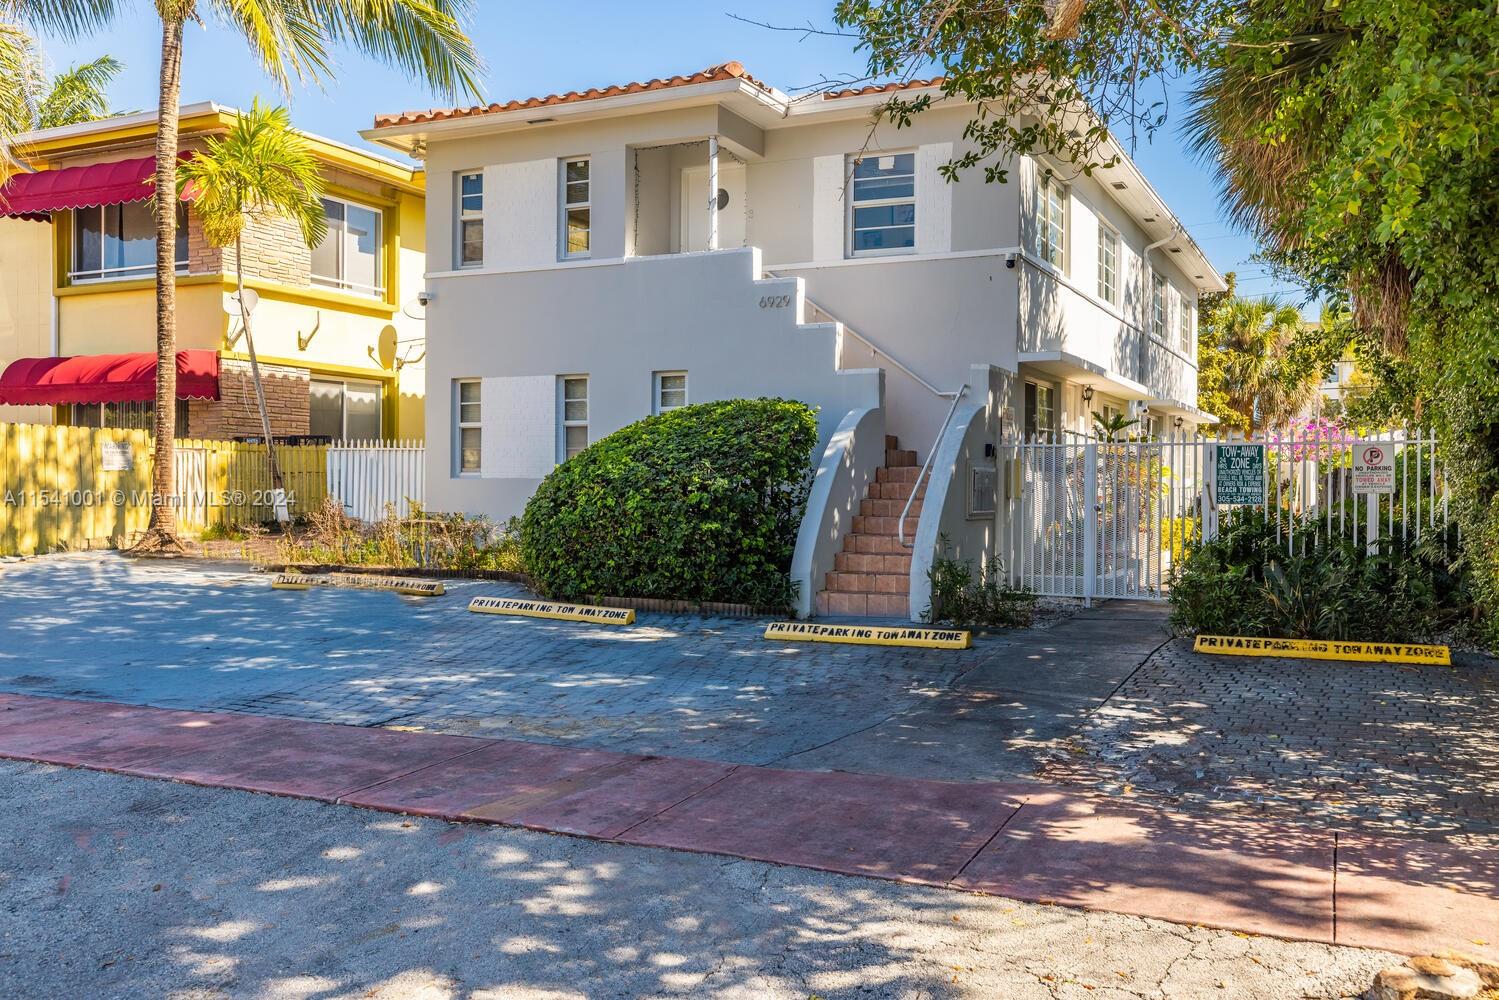 Rental Property at 6929 Rue Vendome, Miami Beach, Miami-Dade County, Florida -  - $1,365,000 MO.